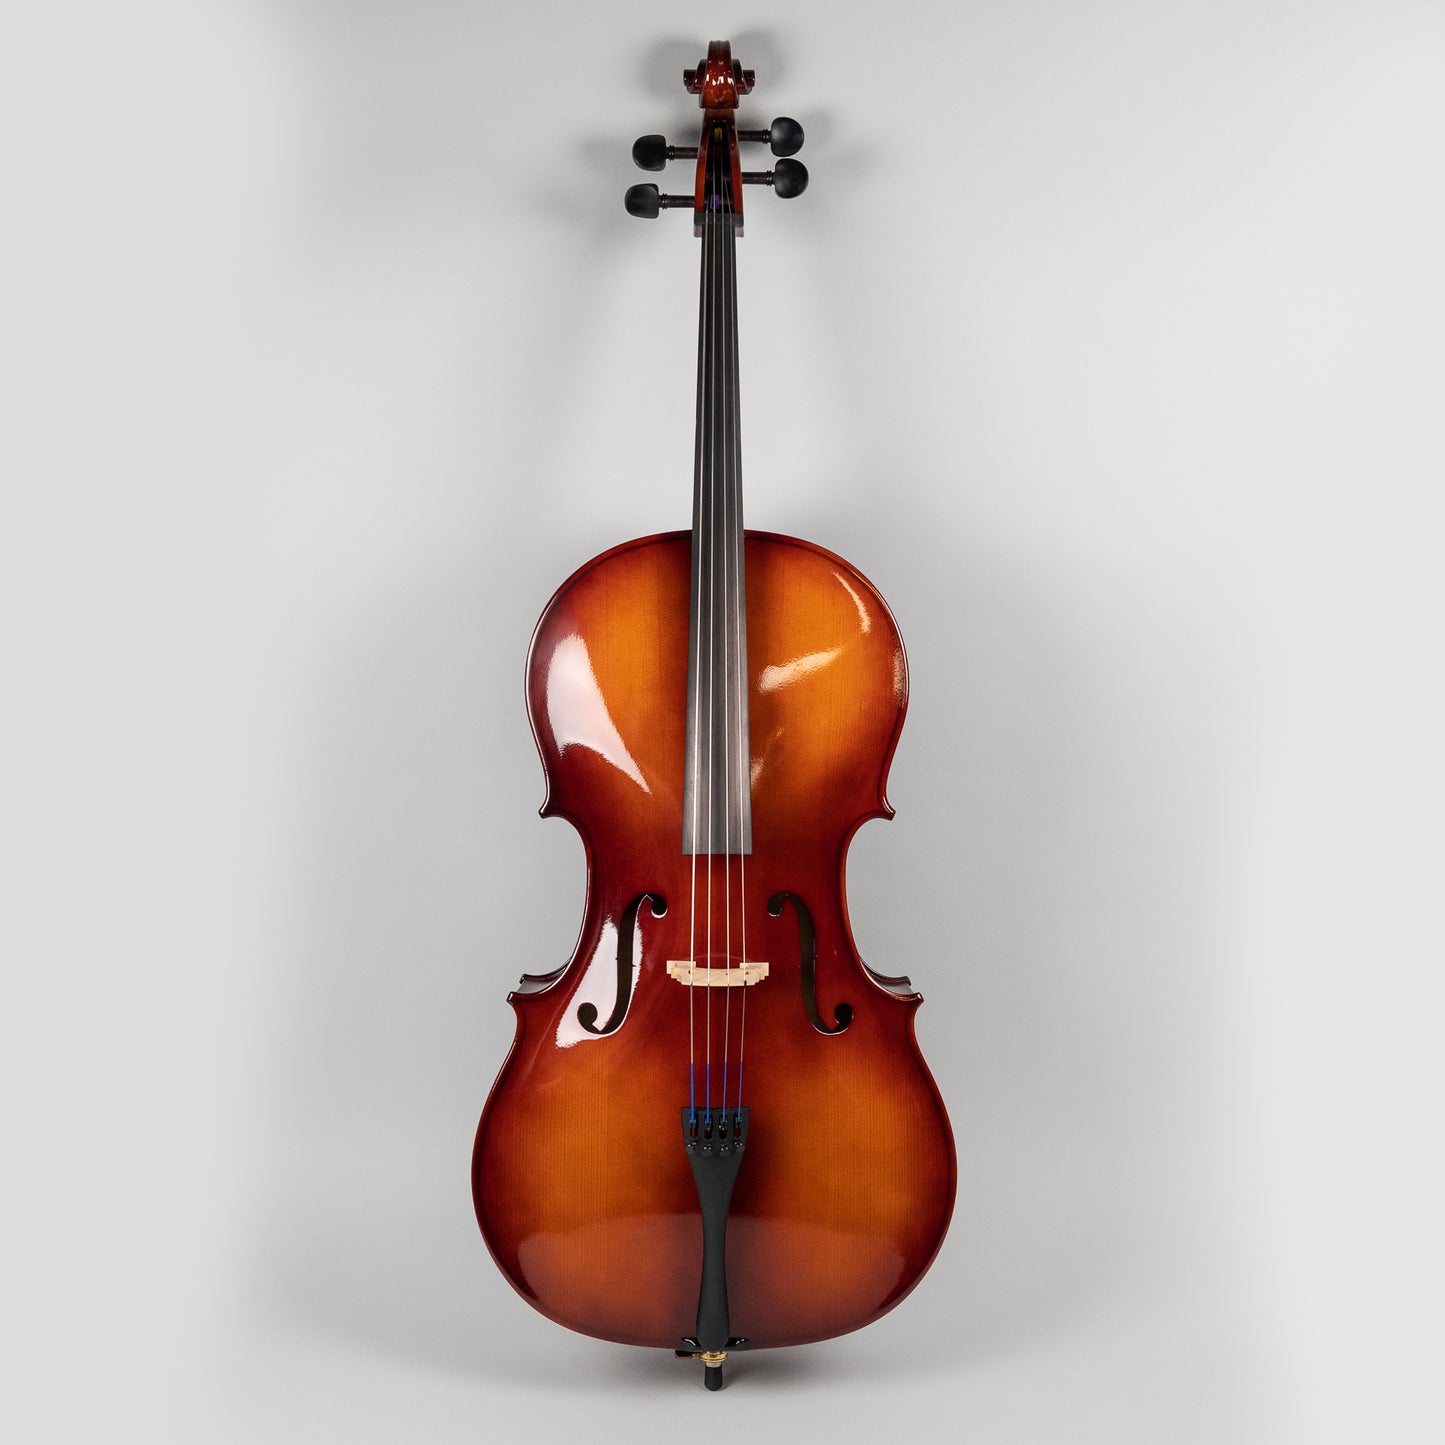 Student Rental Cello